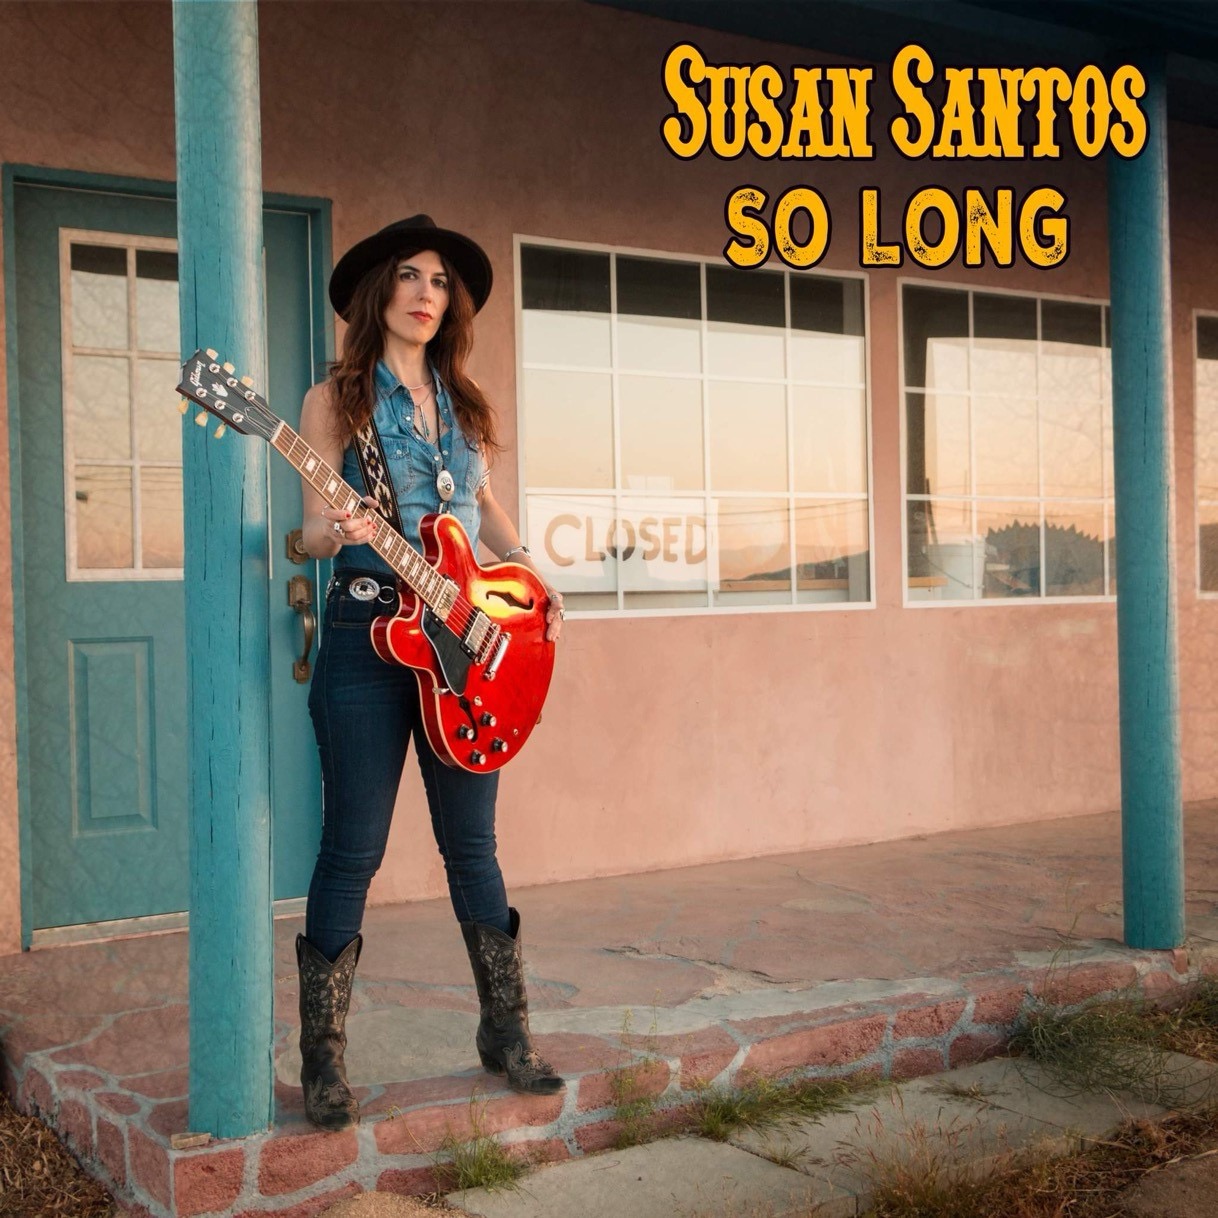 Susan Santos Releases “So Long” Single & Music Video